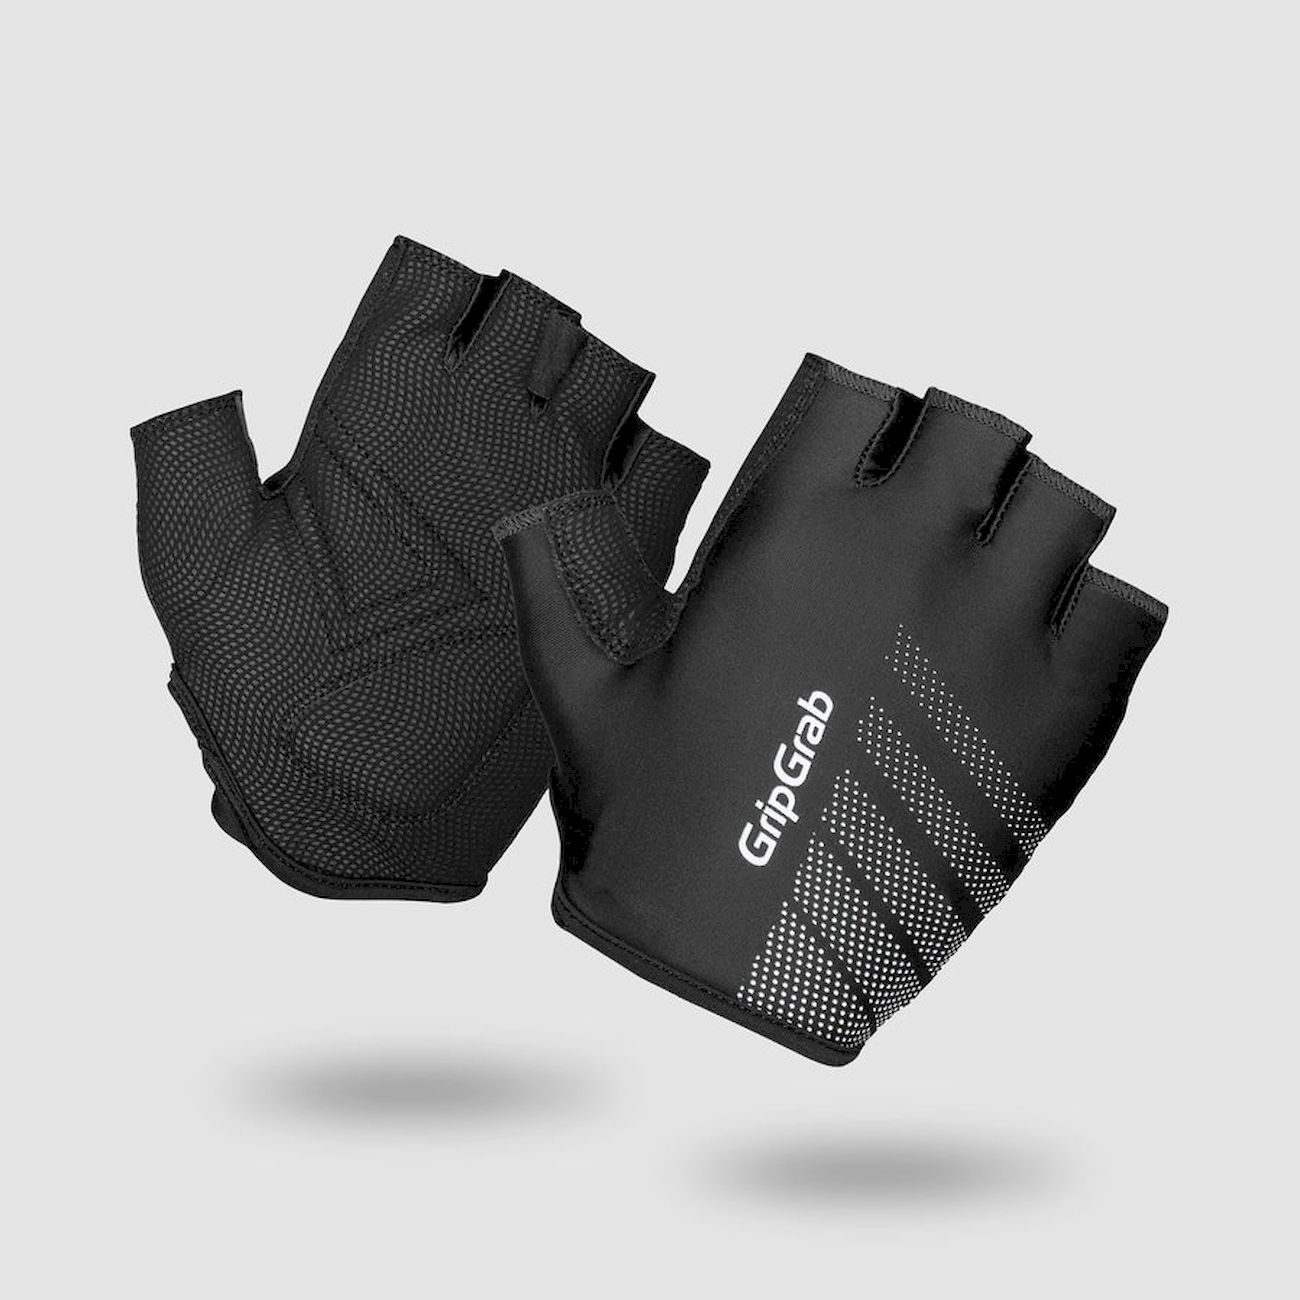 Grip Grab Ride Lightweight Padded Gloves - Guanti corti ciclismo - Uomo